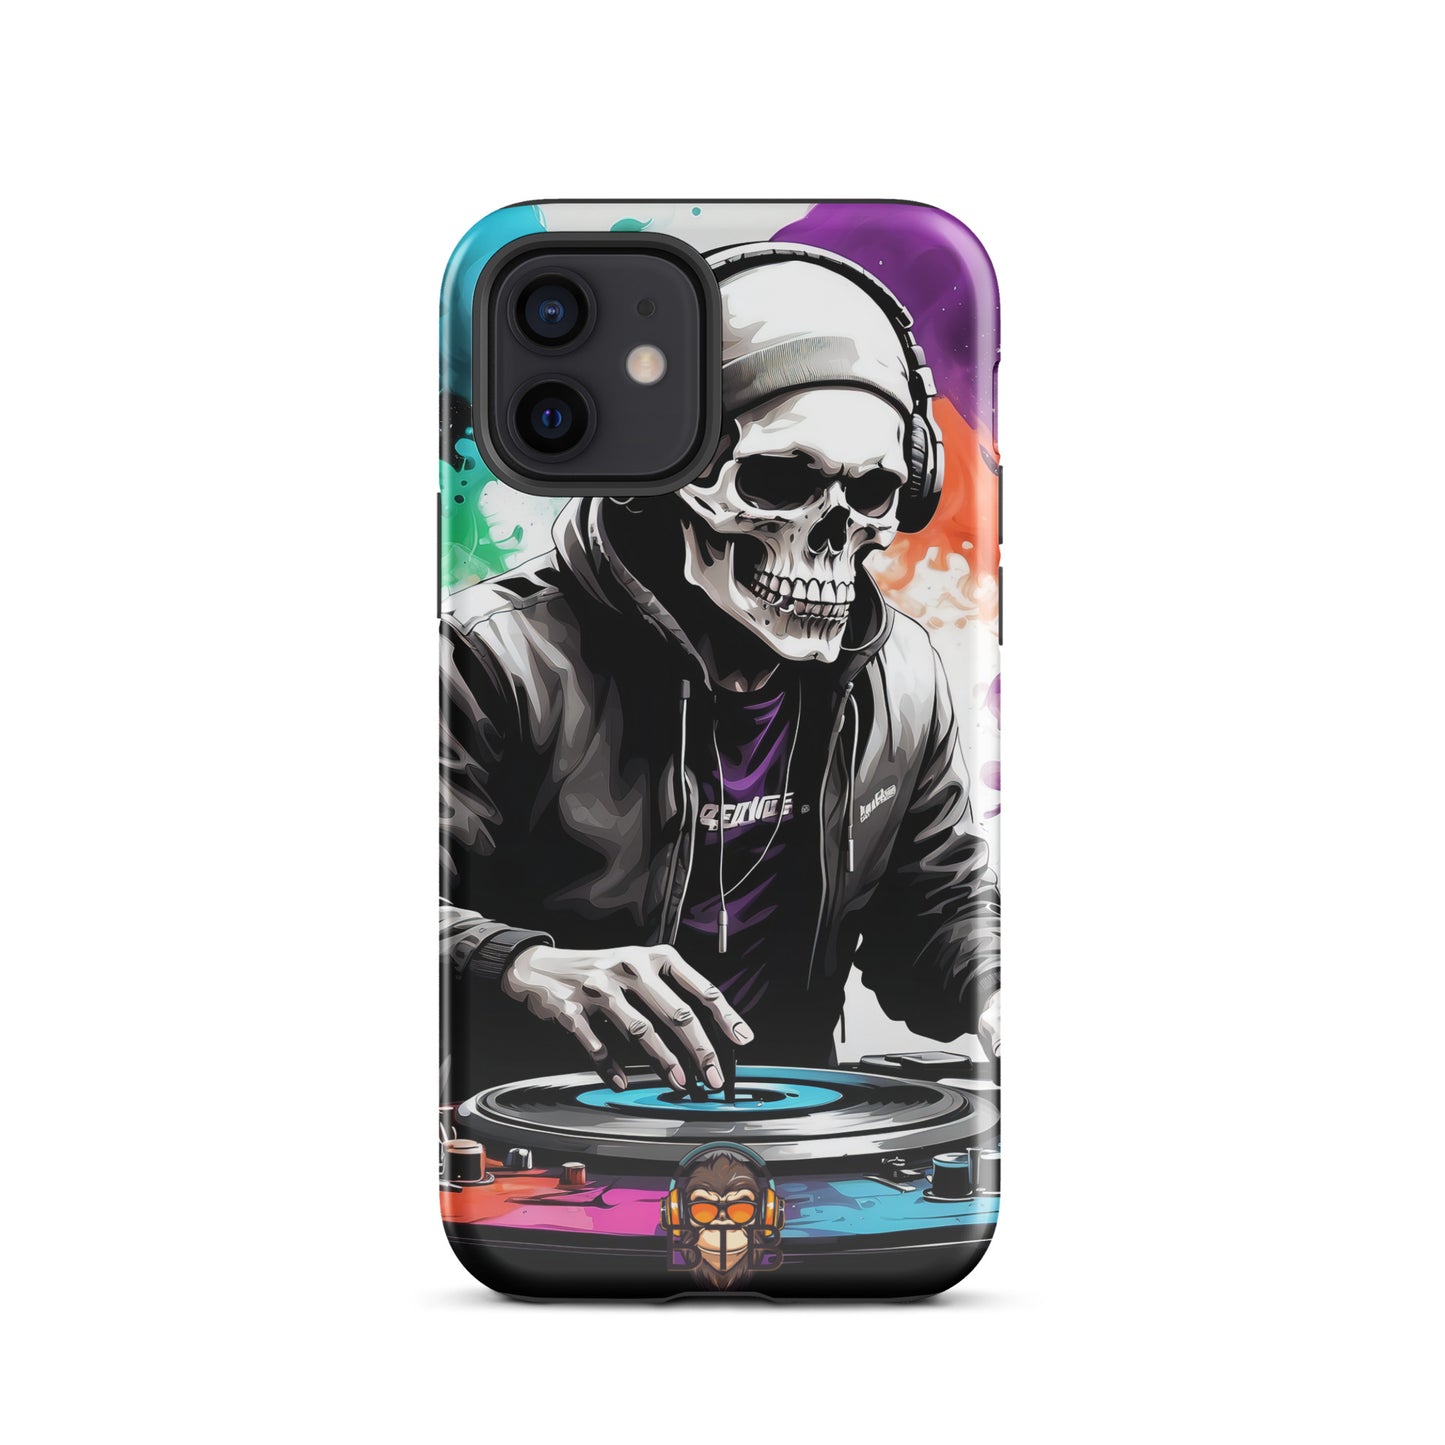 BTB "Deadly DJ" Tough Case for iPhone®